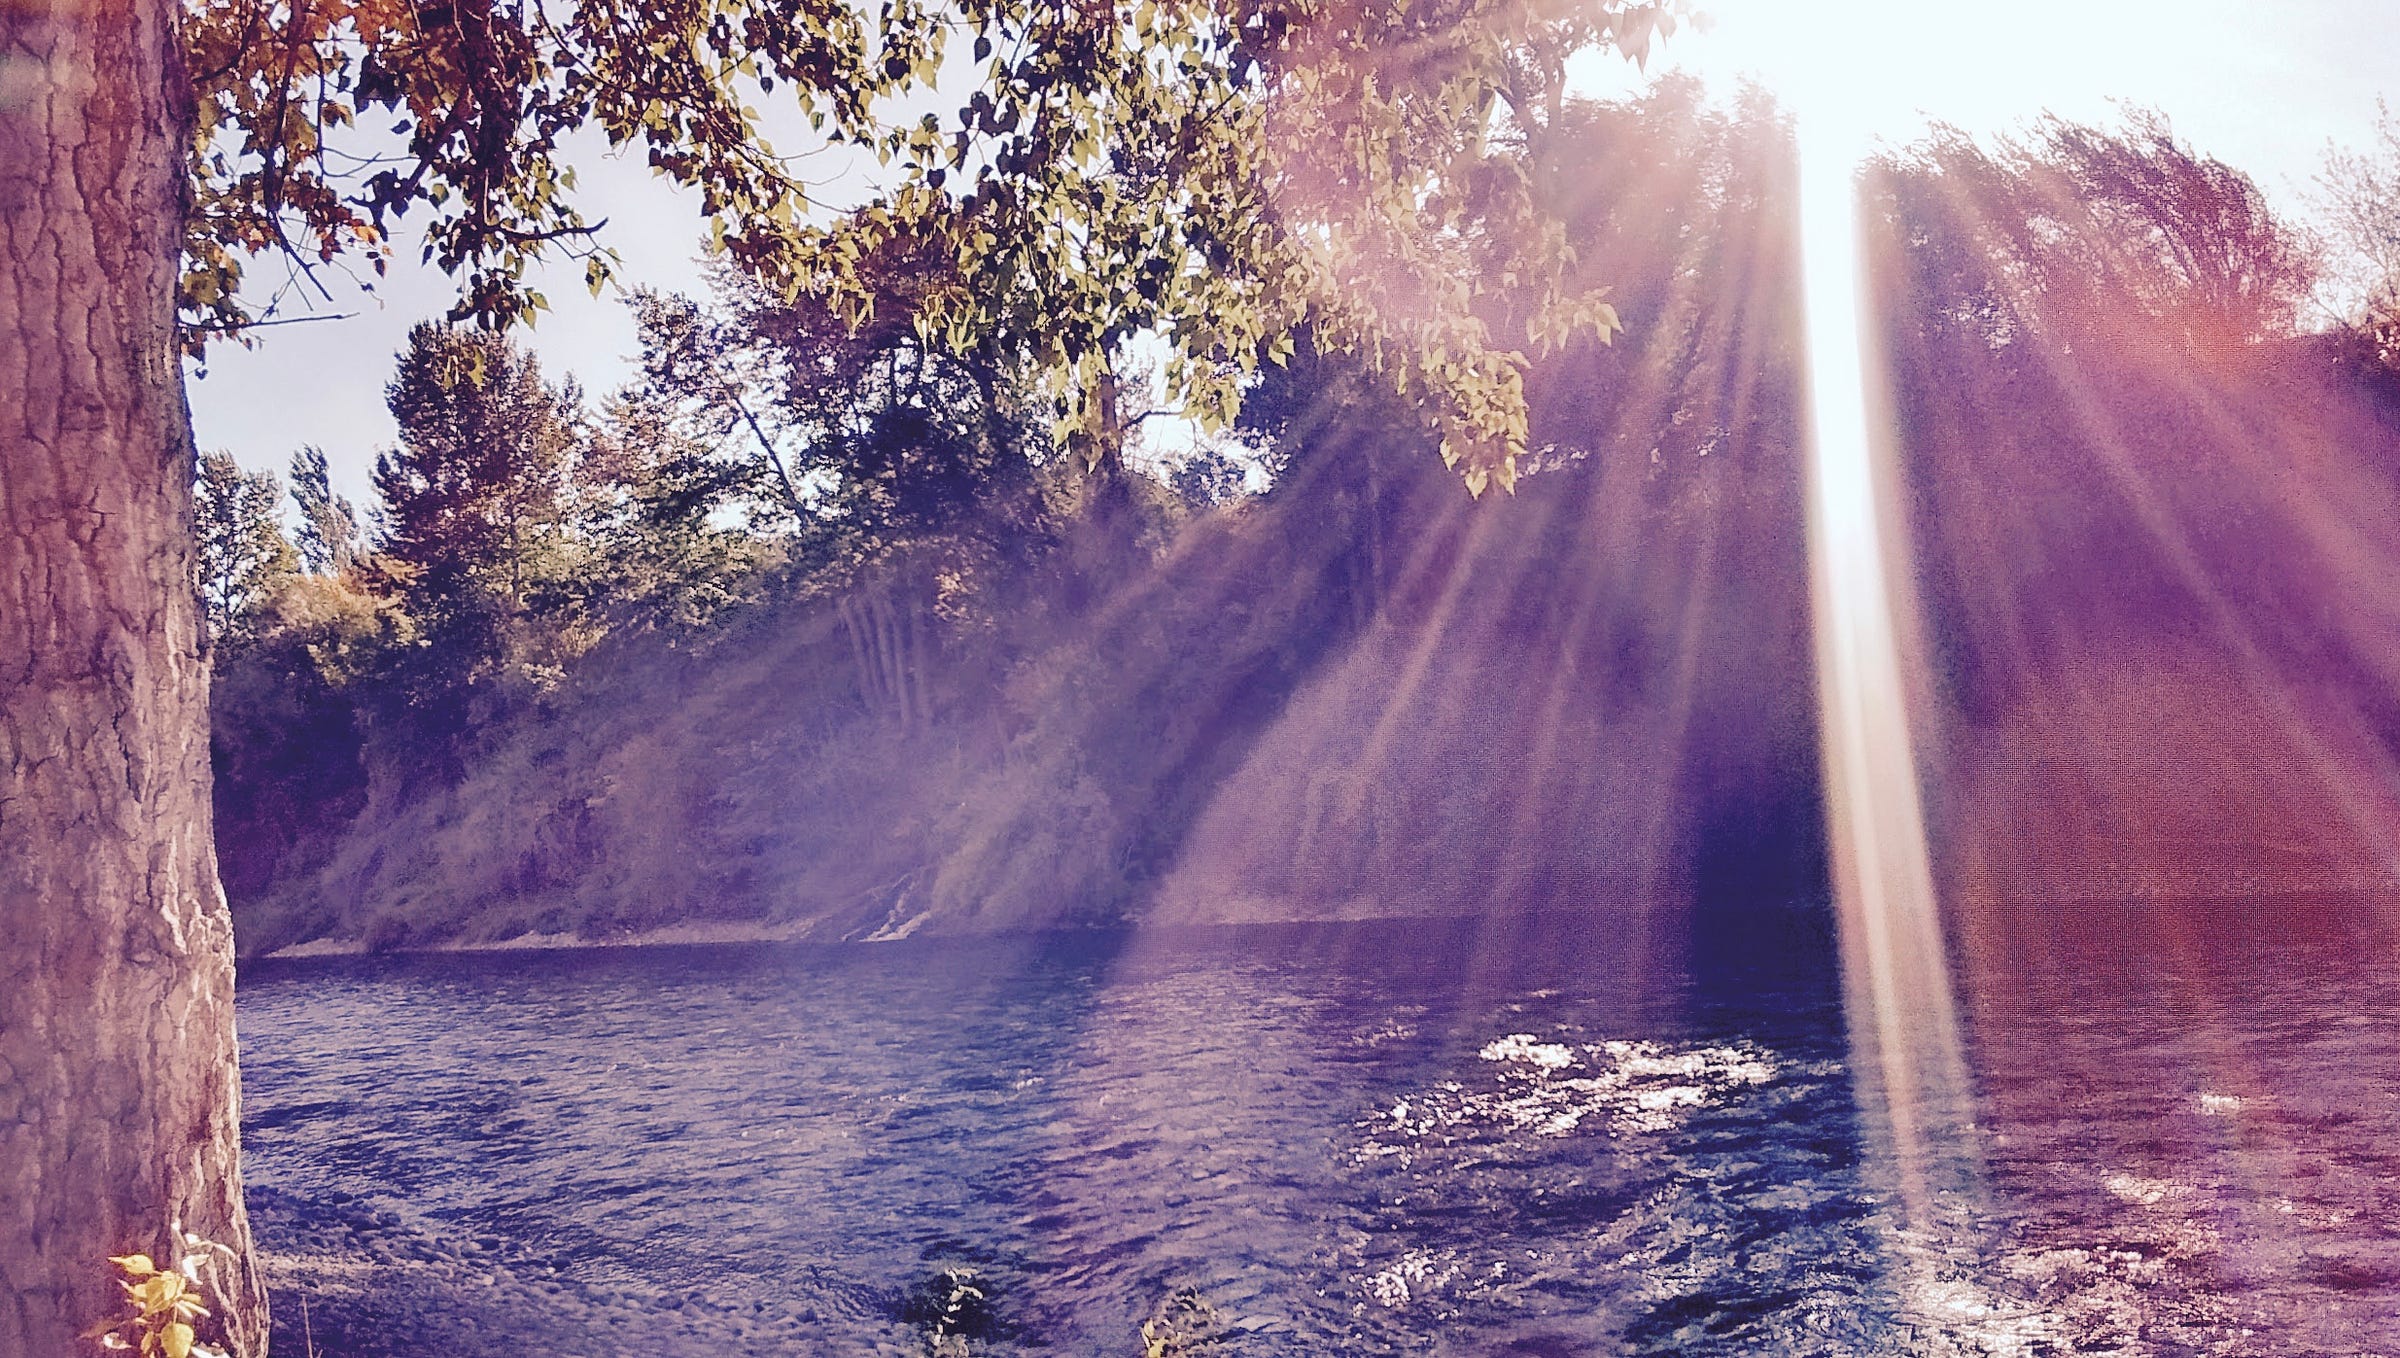 Sunbeams shining on a river